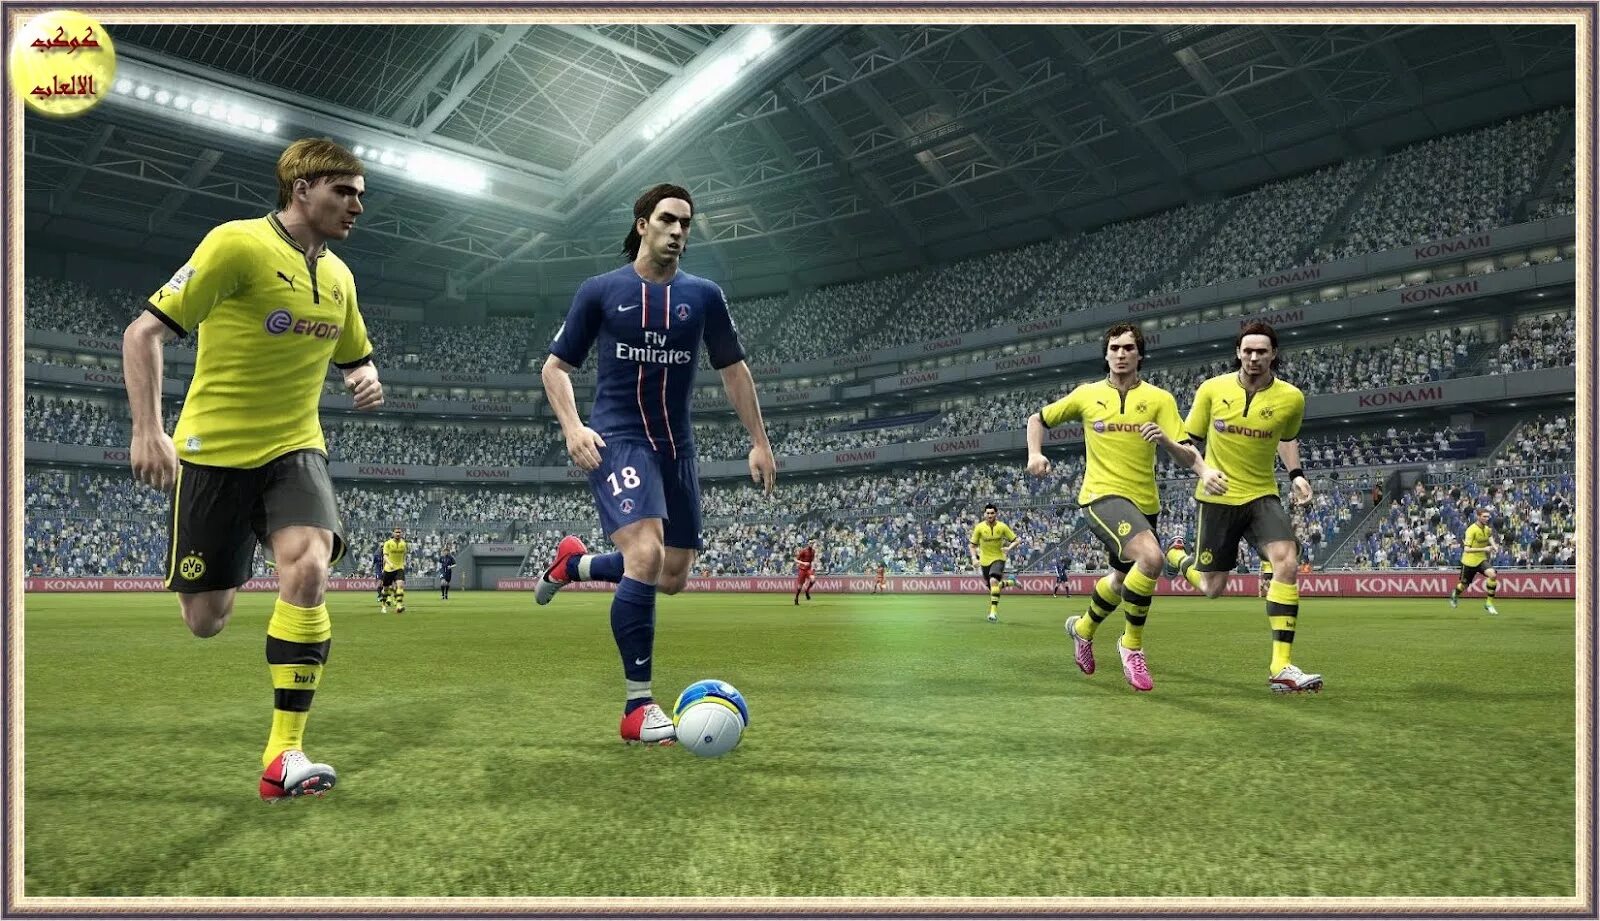 Https igra net. Игра Pro Evolution Soccer 2013. PES 2013 / Pro Evolution Soccer 2013. Pro Evolution Soccer 13 1c. Про эволютион СОККЕР 2013.